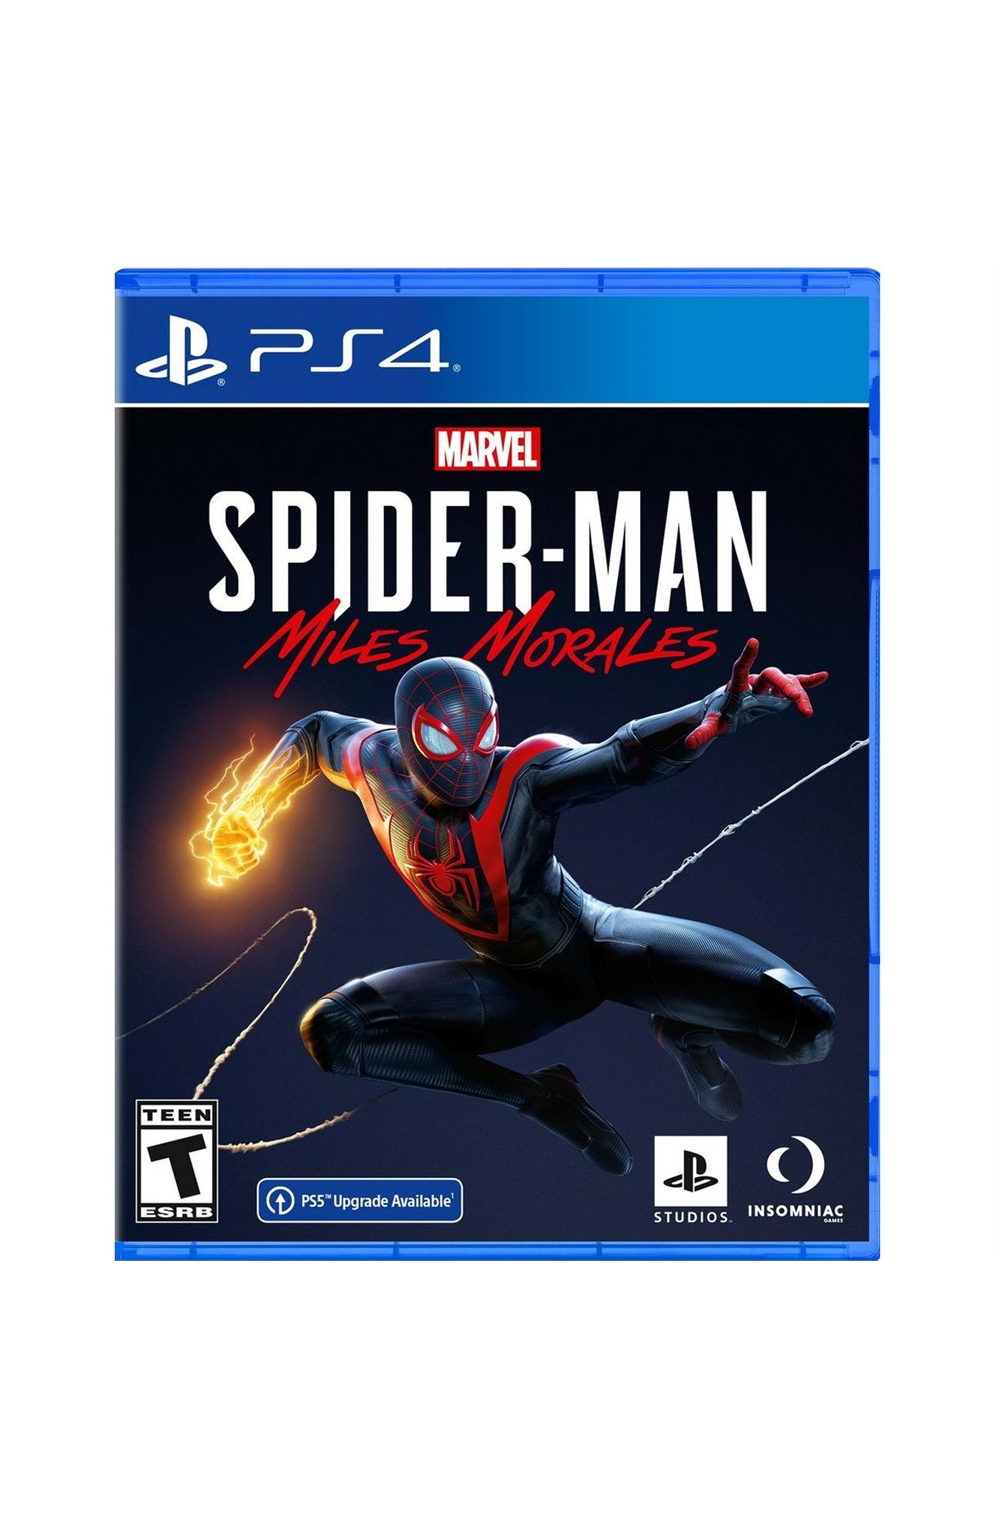 Playstation 4 Ps4 Spider-Man: Miles Morales